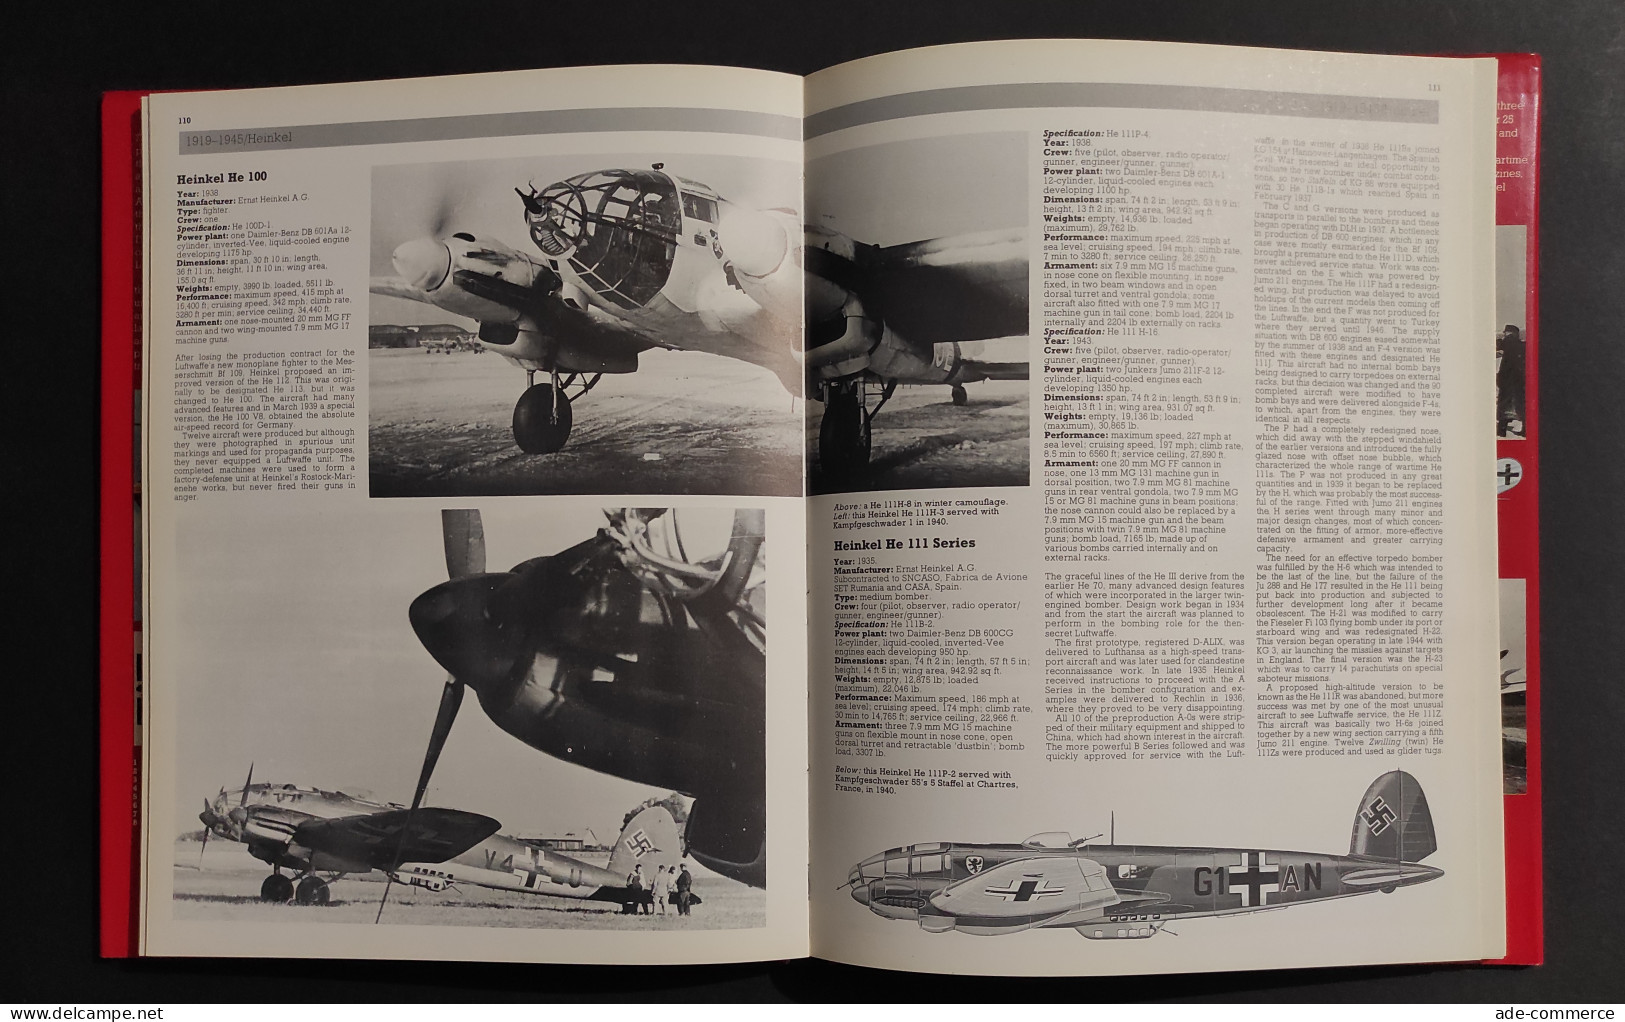 Encyclopedia German Military Aircraft - B. Philpott - Ed. Bison Books - Moteurs